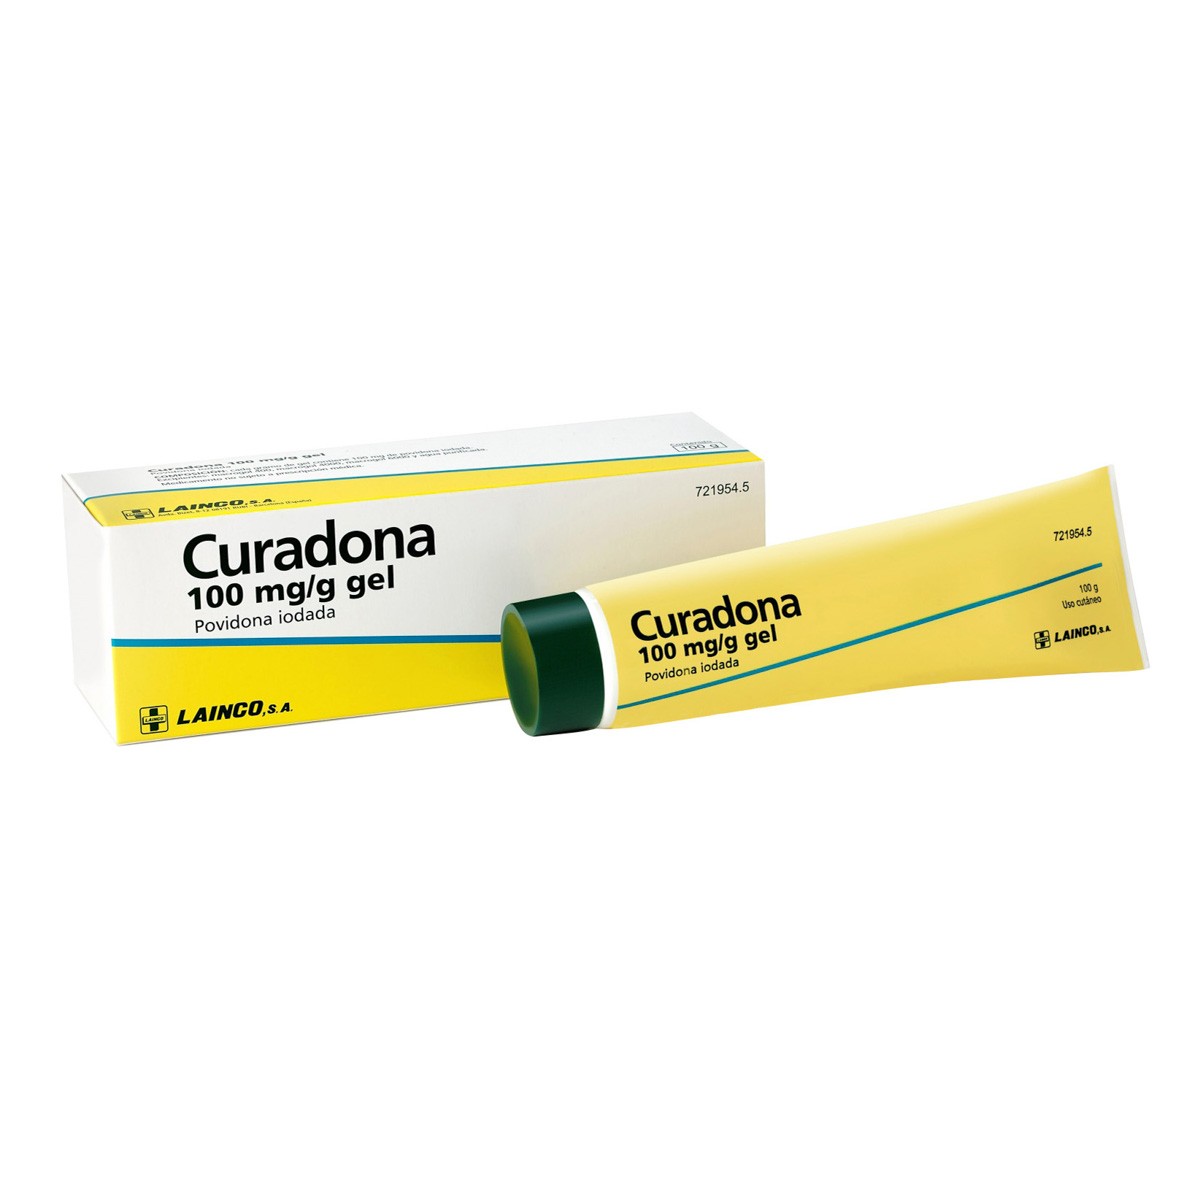 Imagen de Curadona 100 mg/g gel
